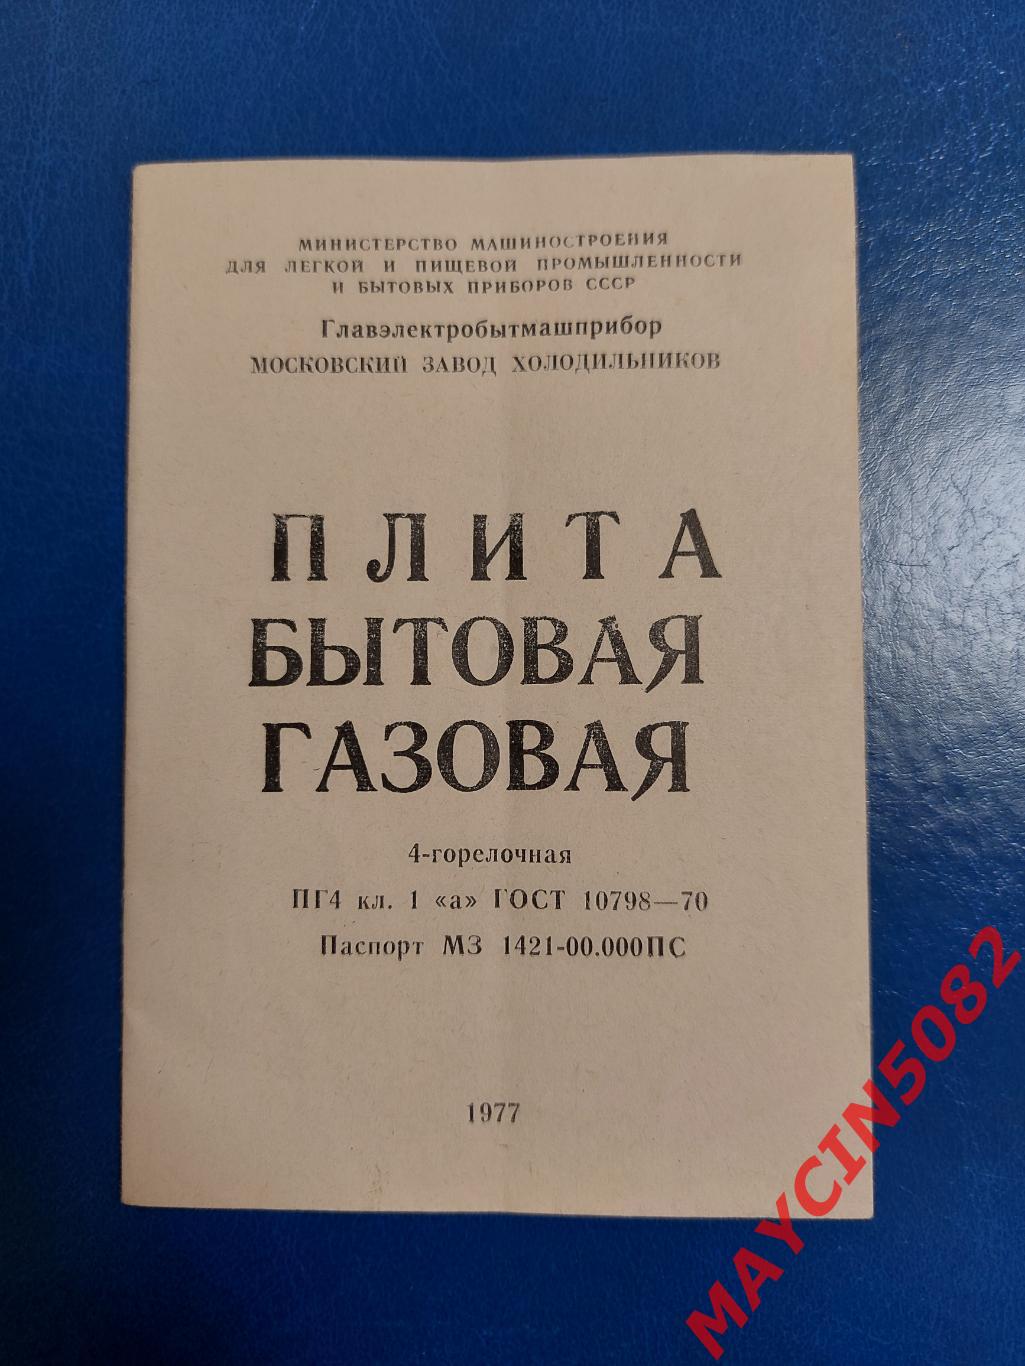 Паспорт. Плита бытовая газовая. 1977 год. Москва.